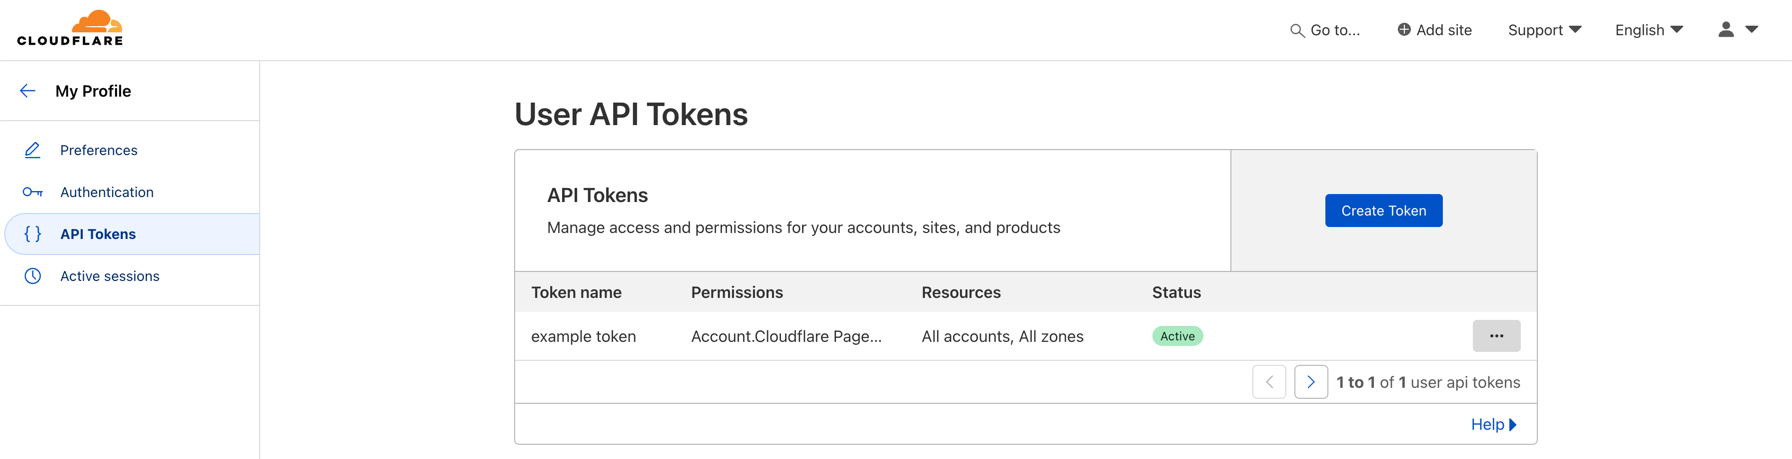 Creating a Cloudflare API Token